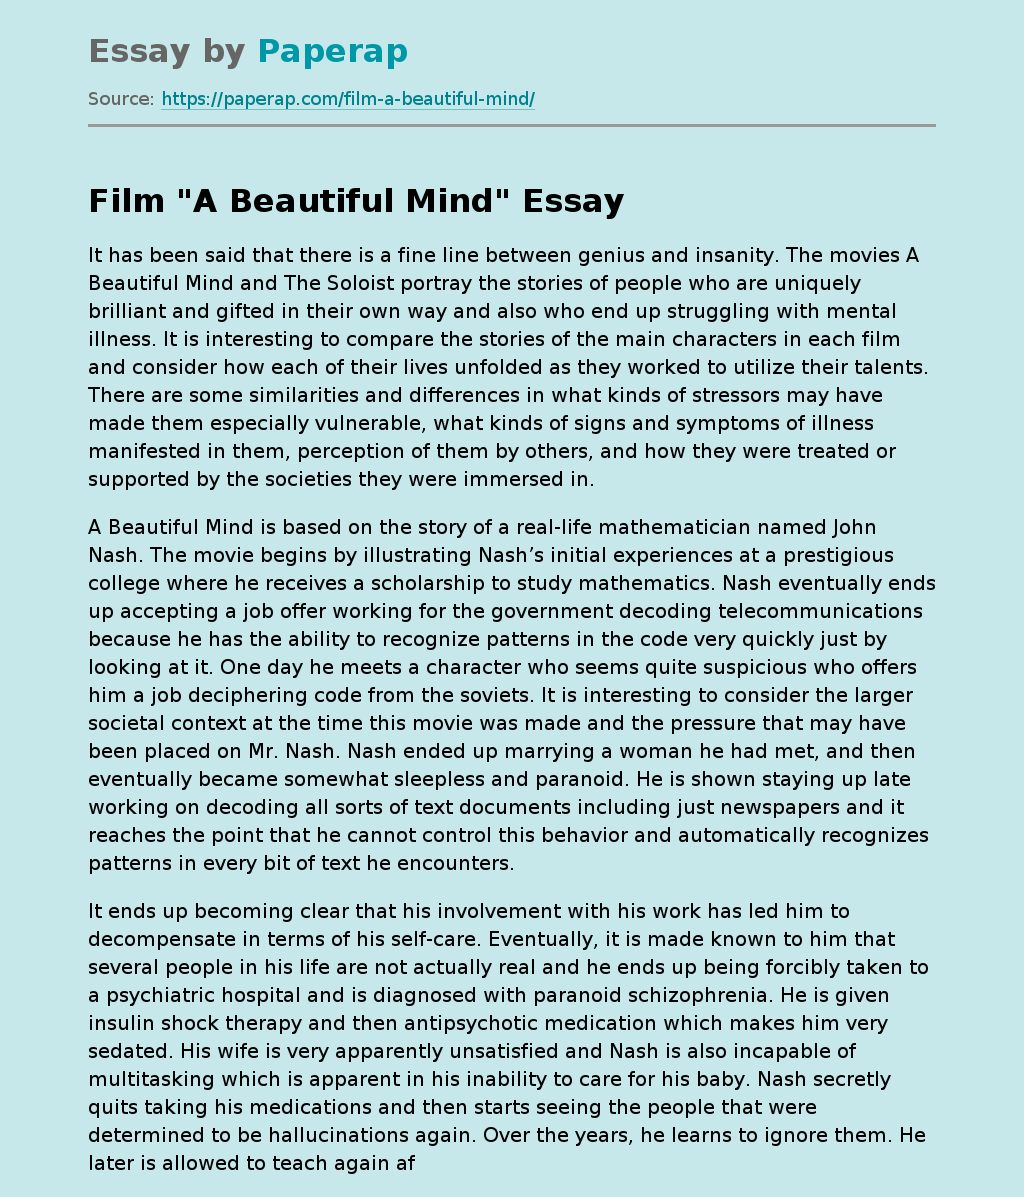 Film "A Beautiful Mind"